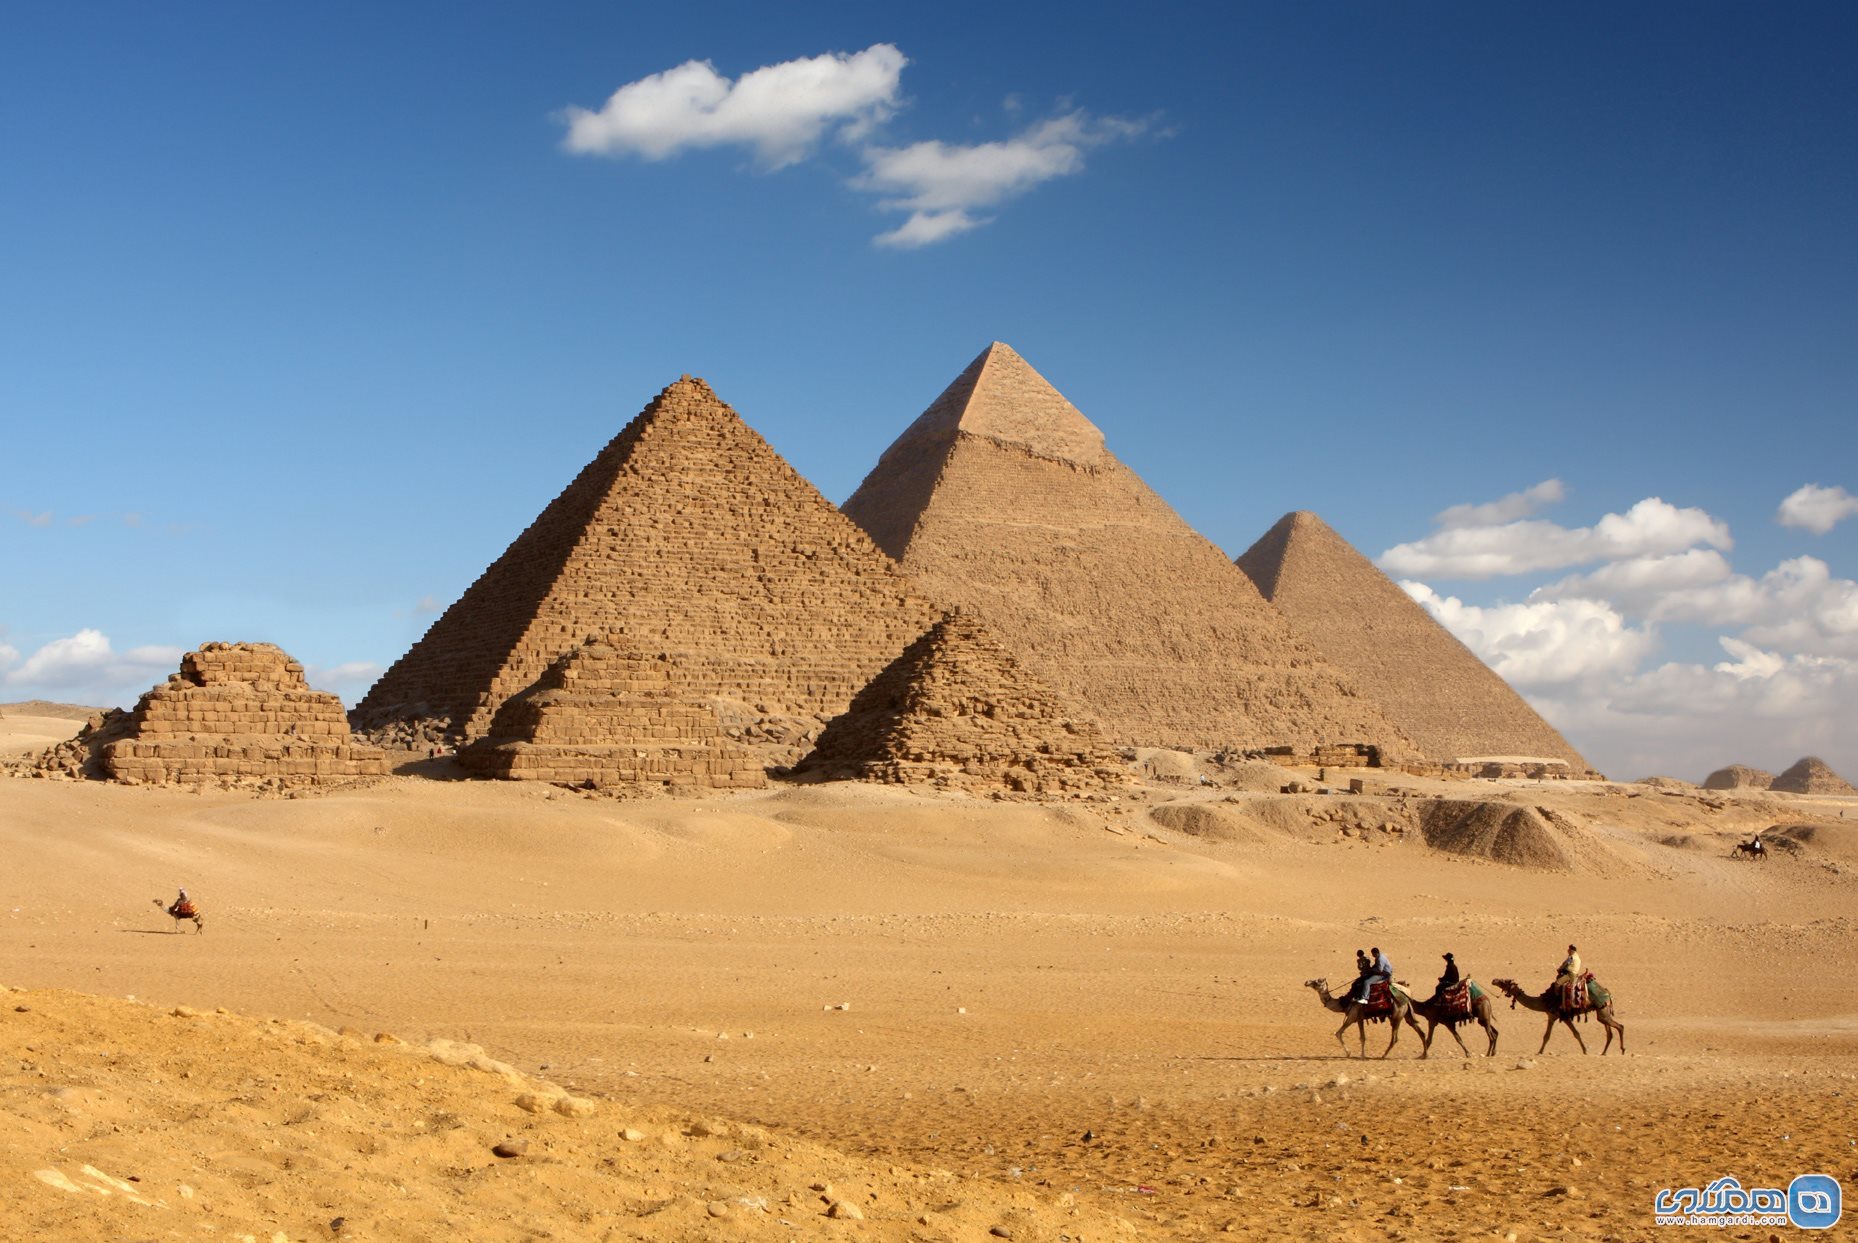 اهرام مصر The Pyramids at Giza